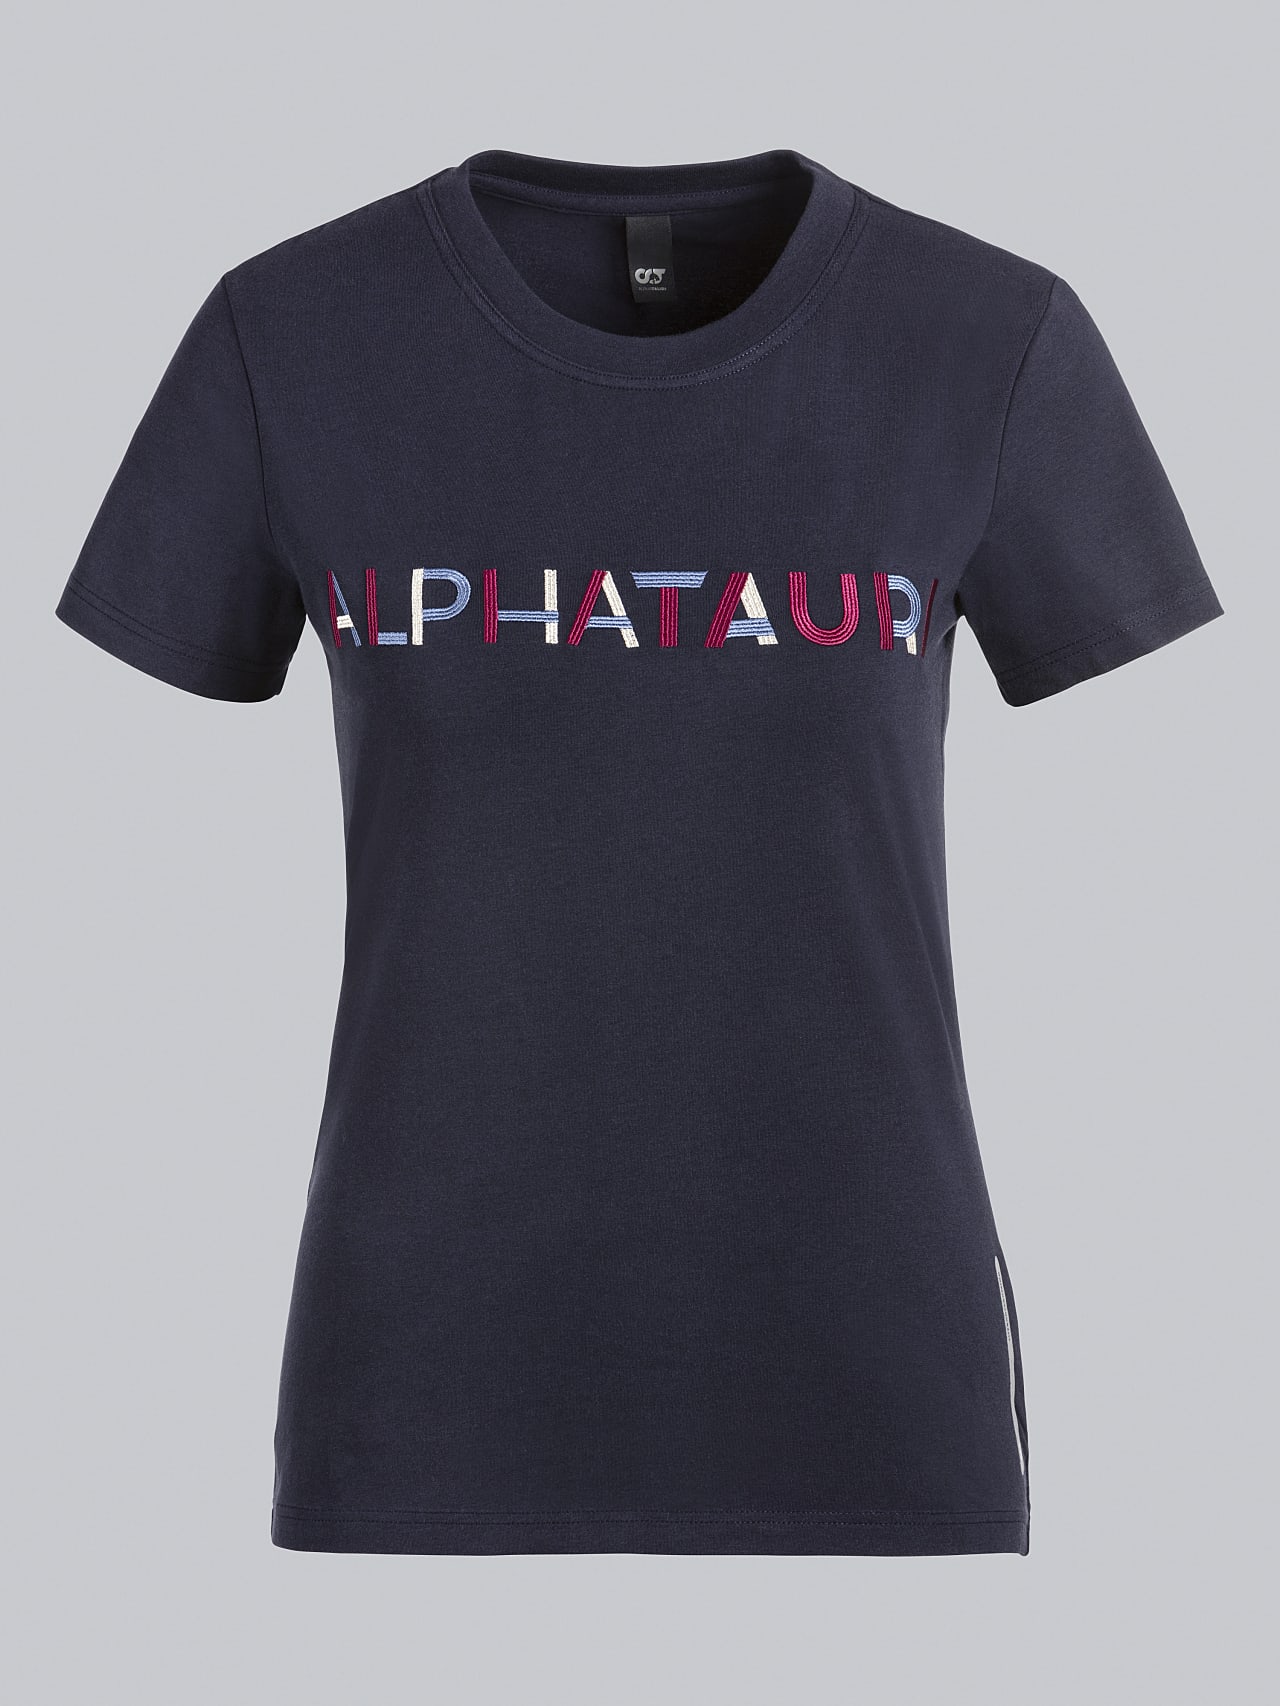 AlphaTauri | JOCTI V3.Y5.02 | Logo T-Shirt in navy for Women